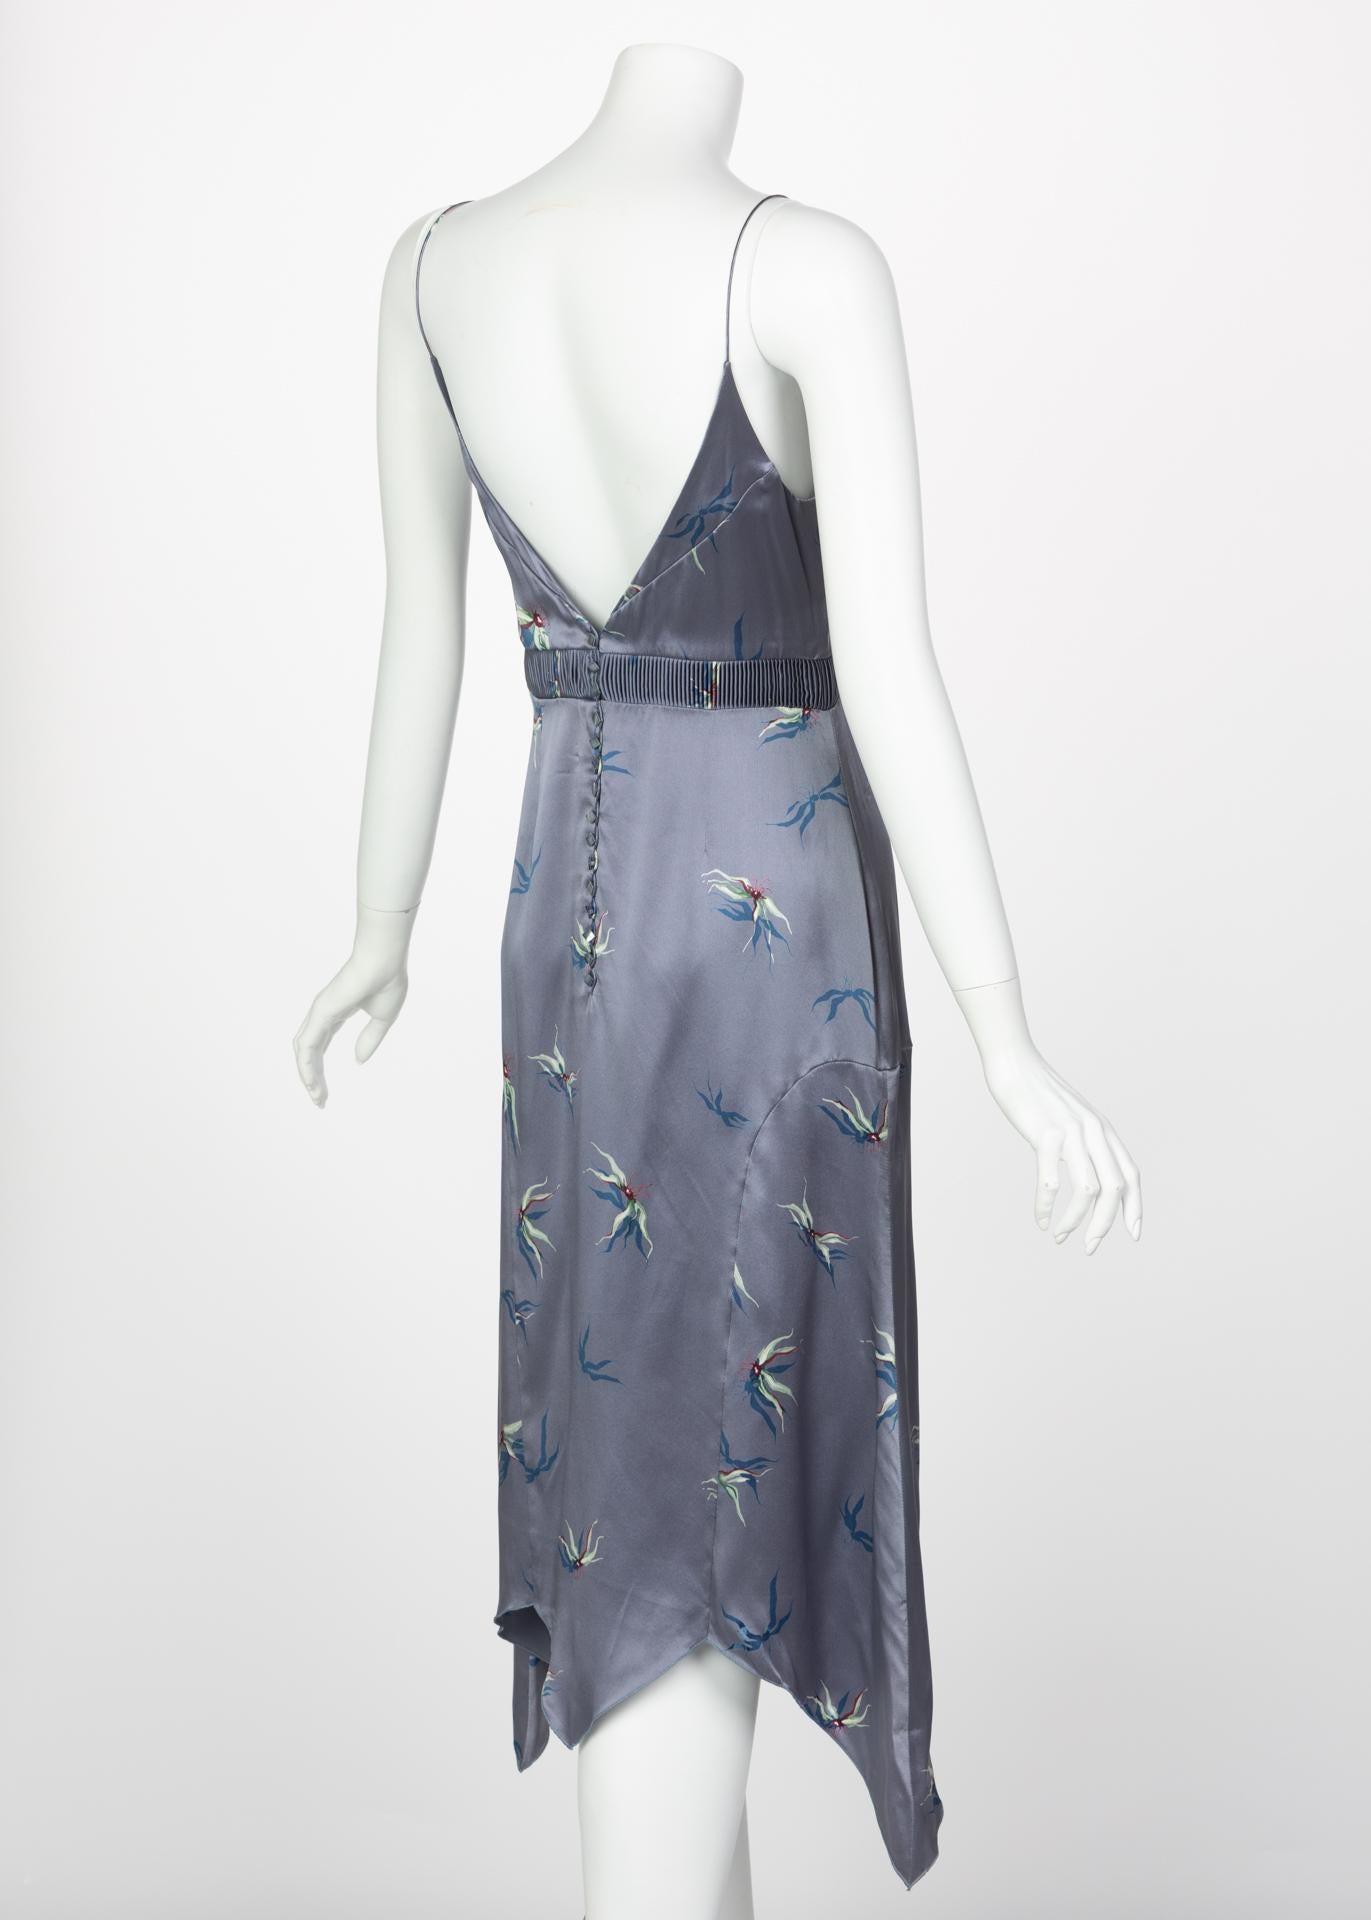 Women's Chloé Stella McCartney Silk Slip Dress Shawl Set , 1990s